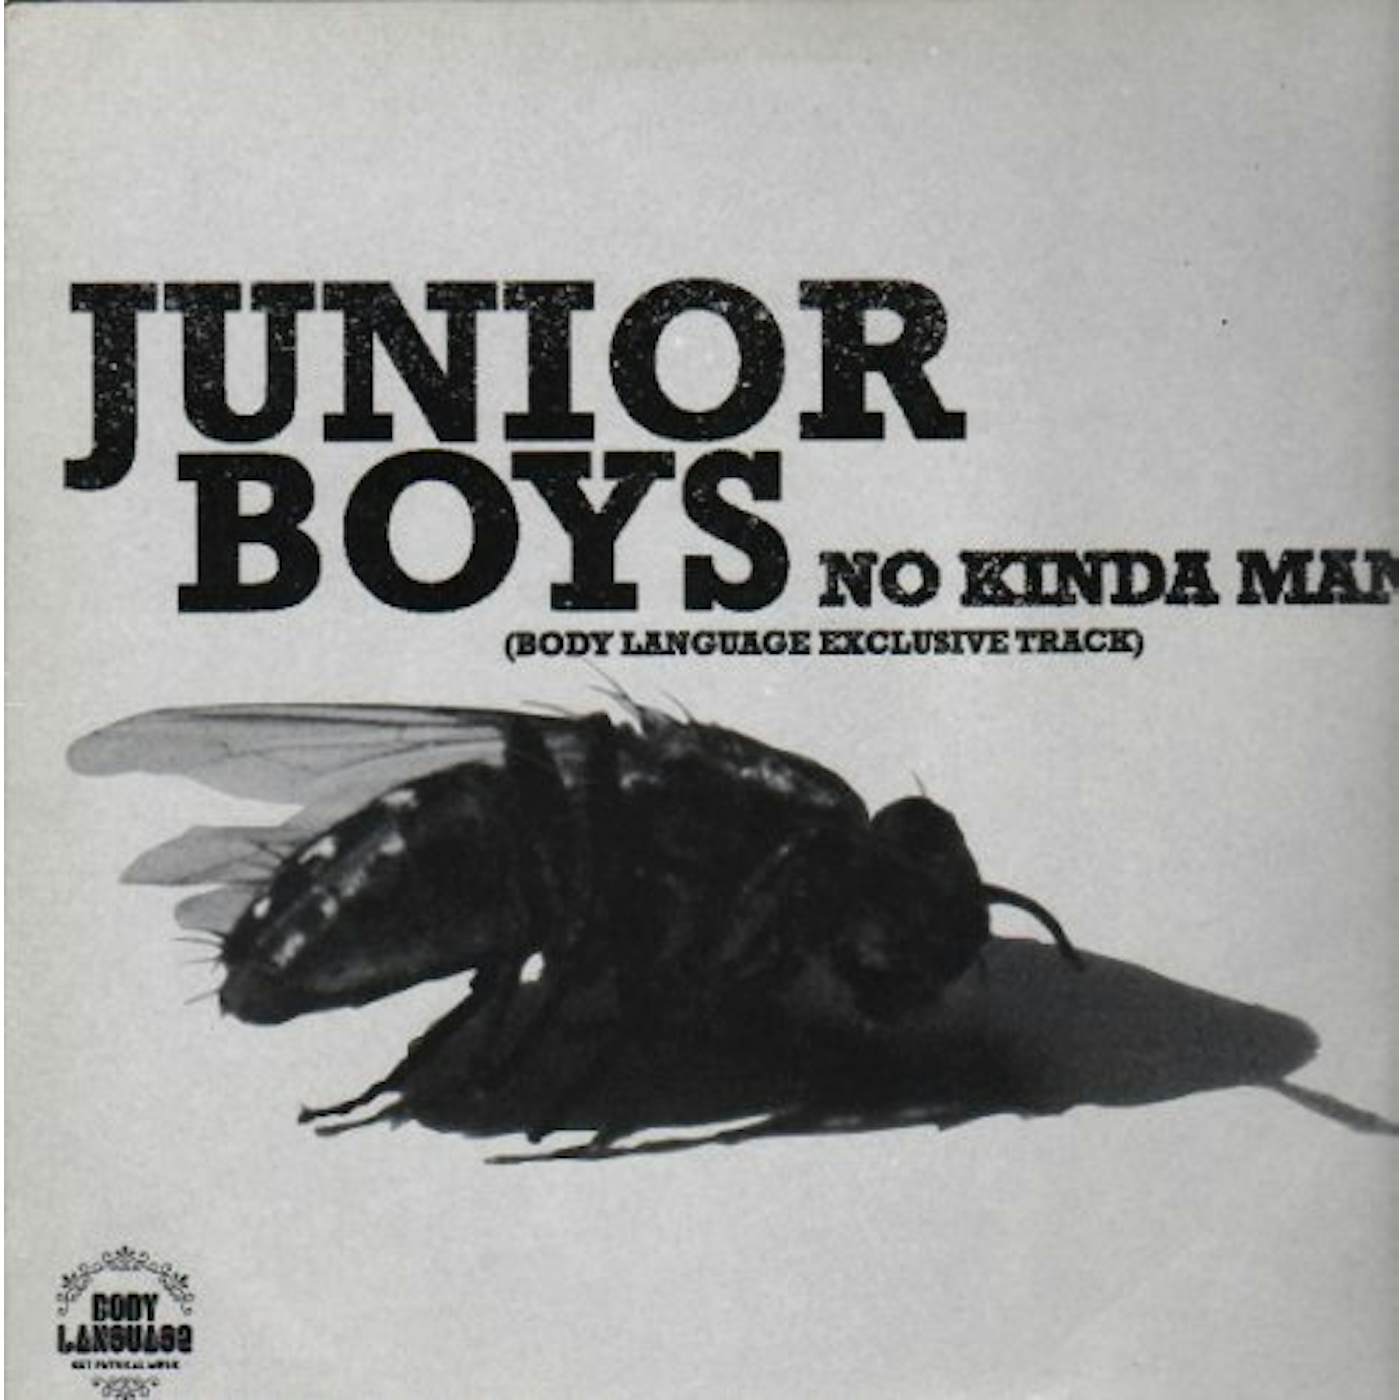 Junior Boys NO KINDA MAN Vinyl Record